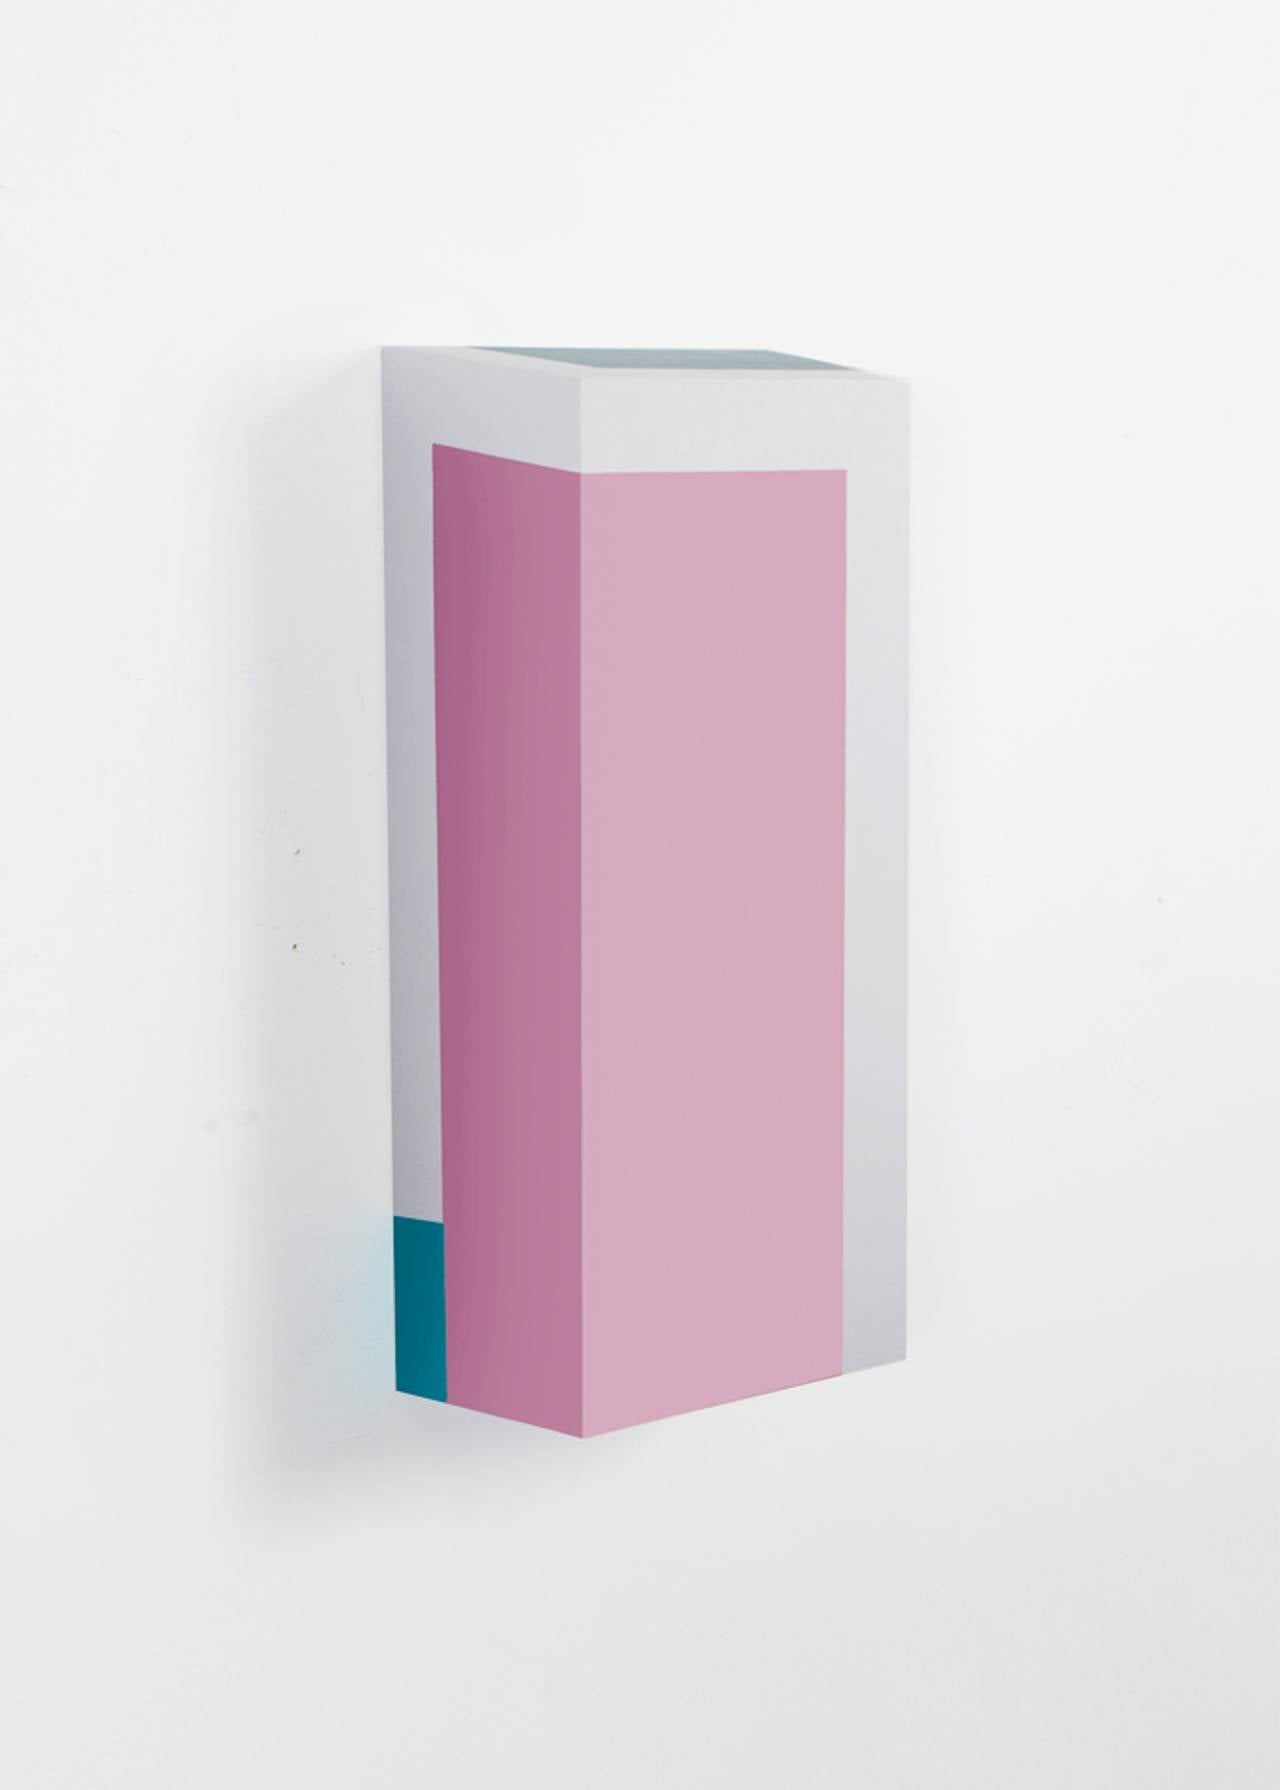 Zin Helena Song Abstract Painting – Trapezium- Origami #4 – graues, rosafarbenes und blaues skulpturales Gemälde auf Holz